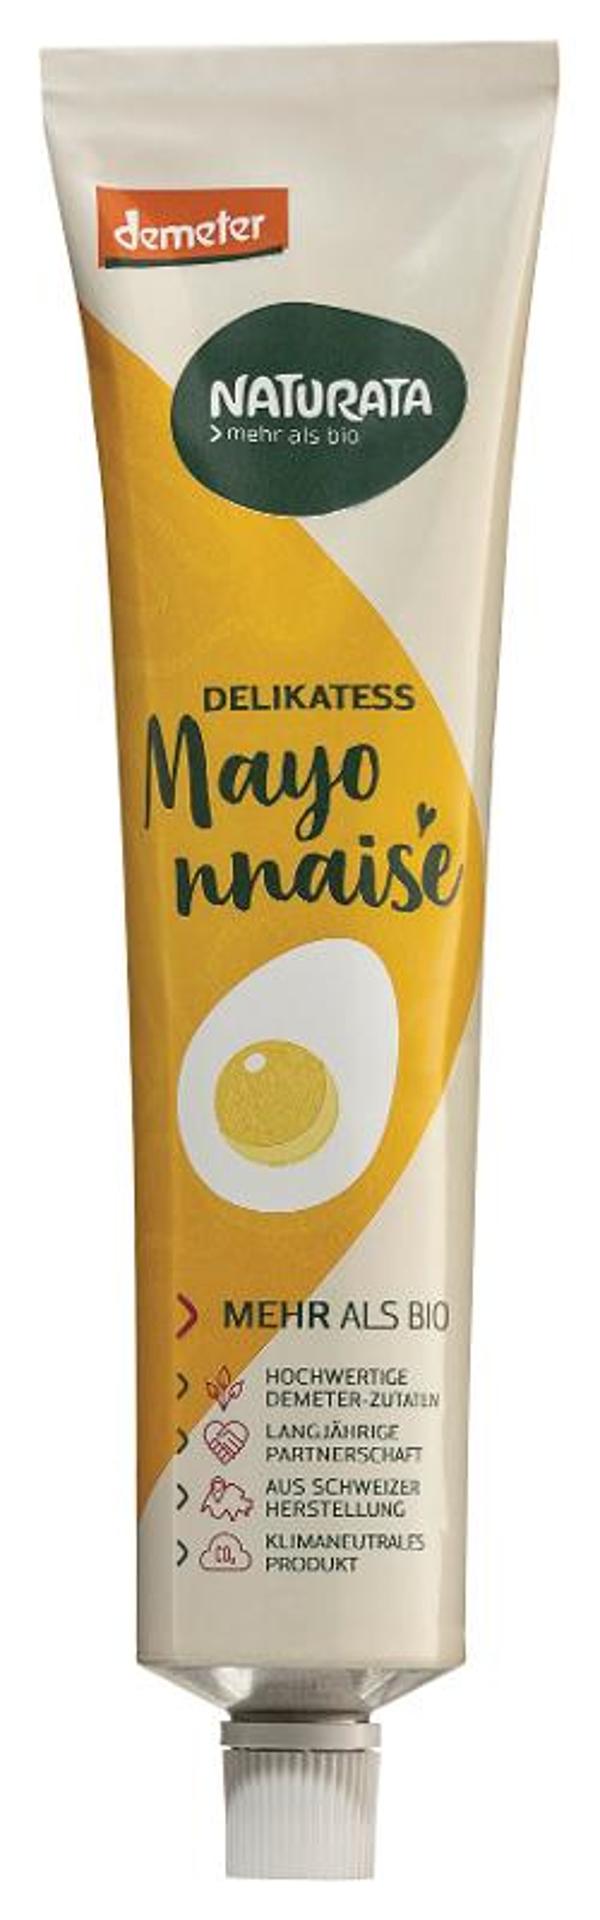 Produktfoto zu Delikatess Mayonnaise in der Tube 185ml